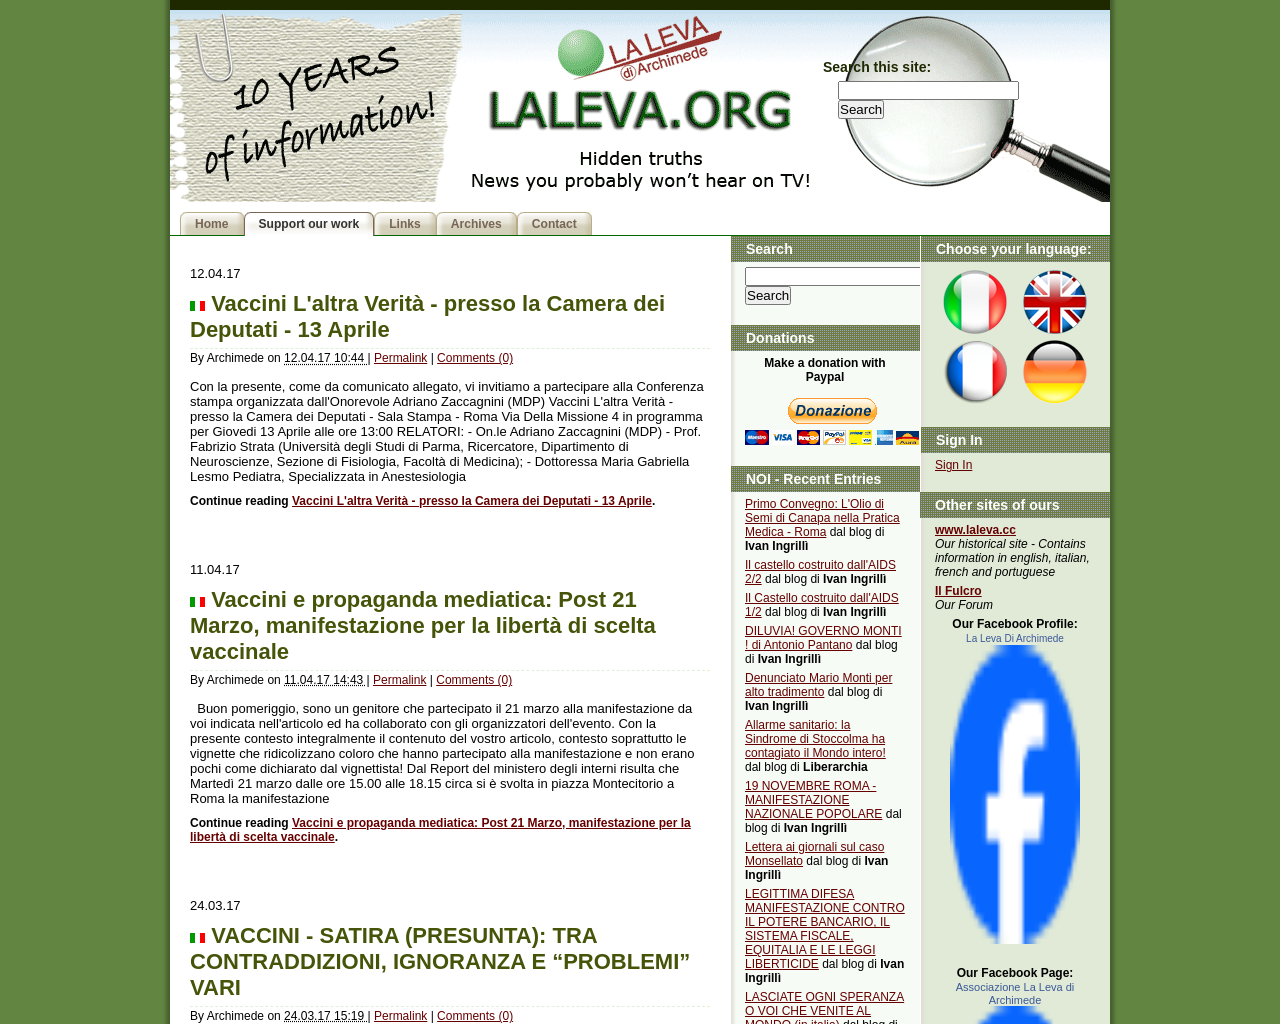 laleva.org